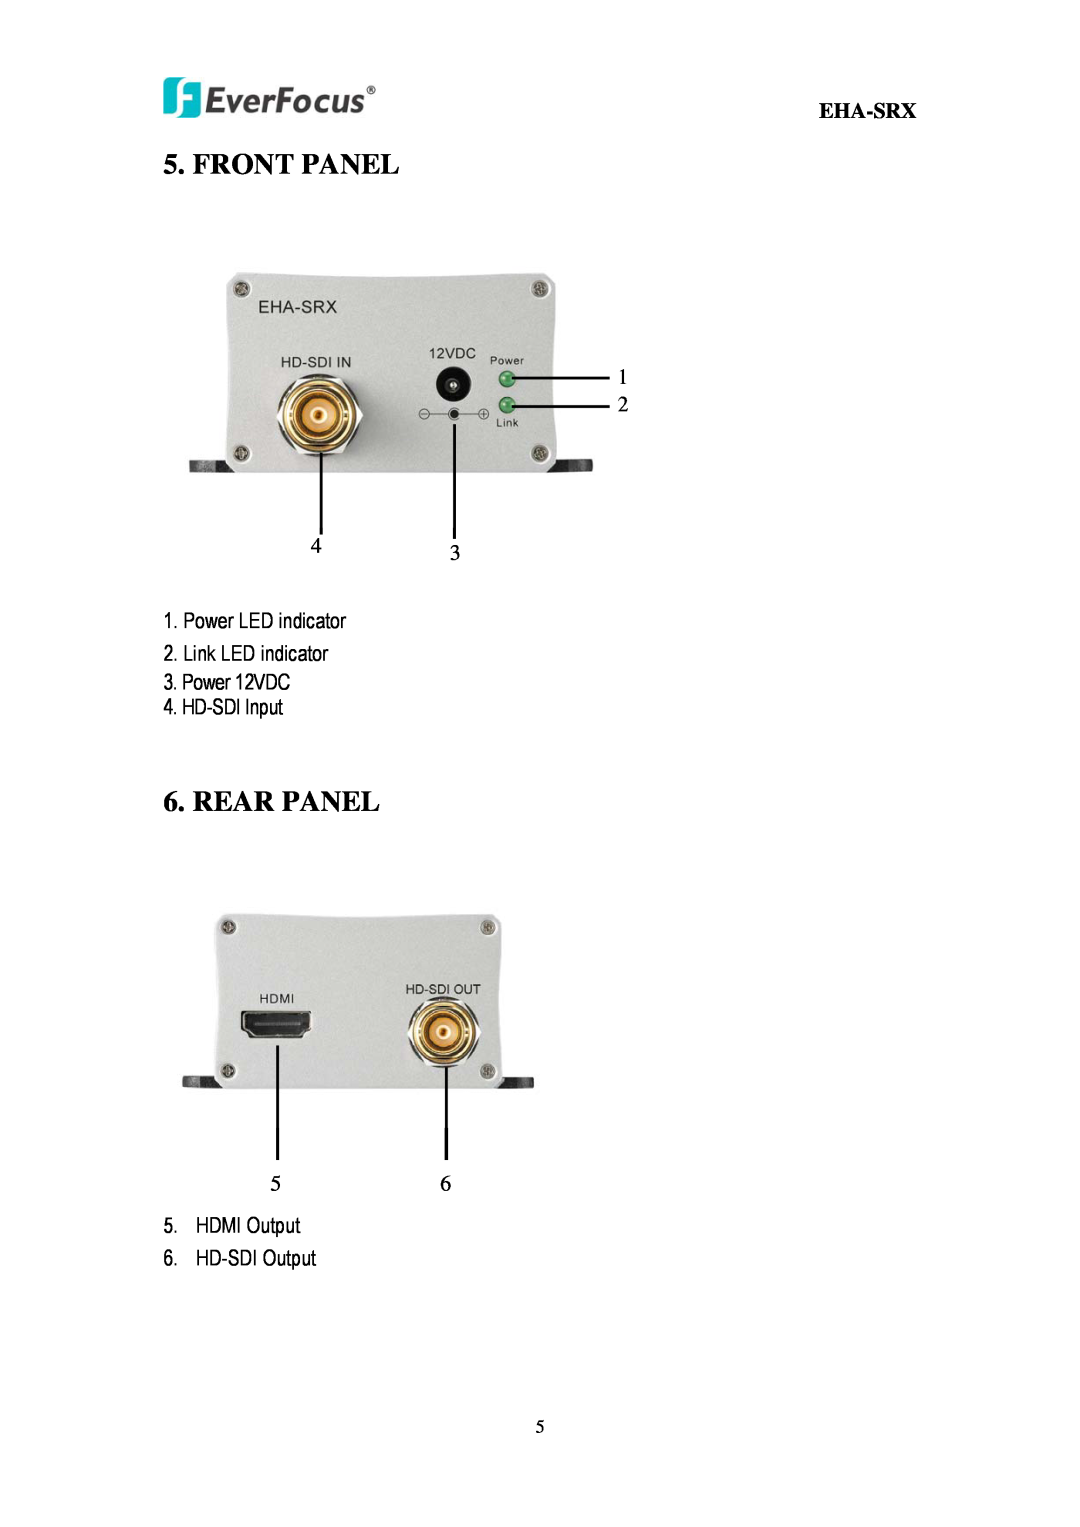 EverFocus EHA-SRX Front Panel, Rear Panel, Eha-Srx, Power LED indicator 2. Link LED indicator 3. Power 12VDC, HD-SDI Input 